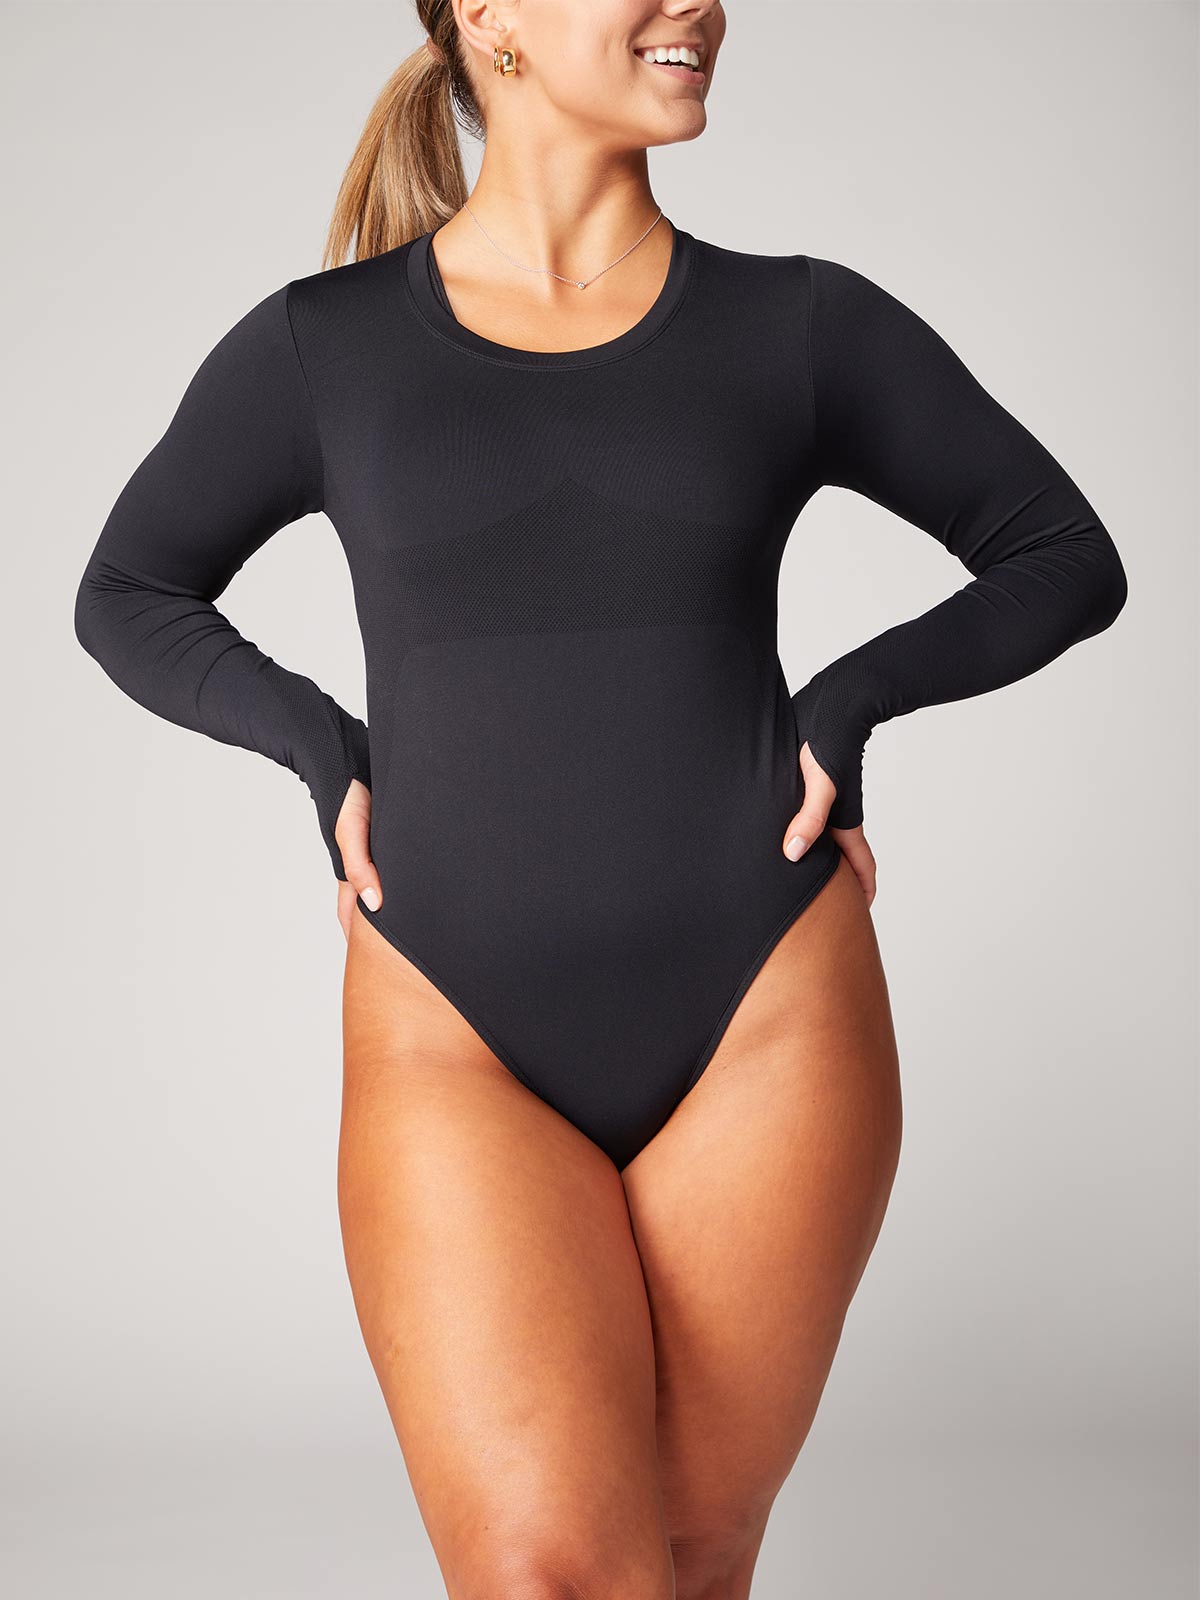 Women's Seamless Bodysuit Camisole - Black / Long Sleeves